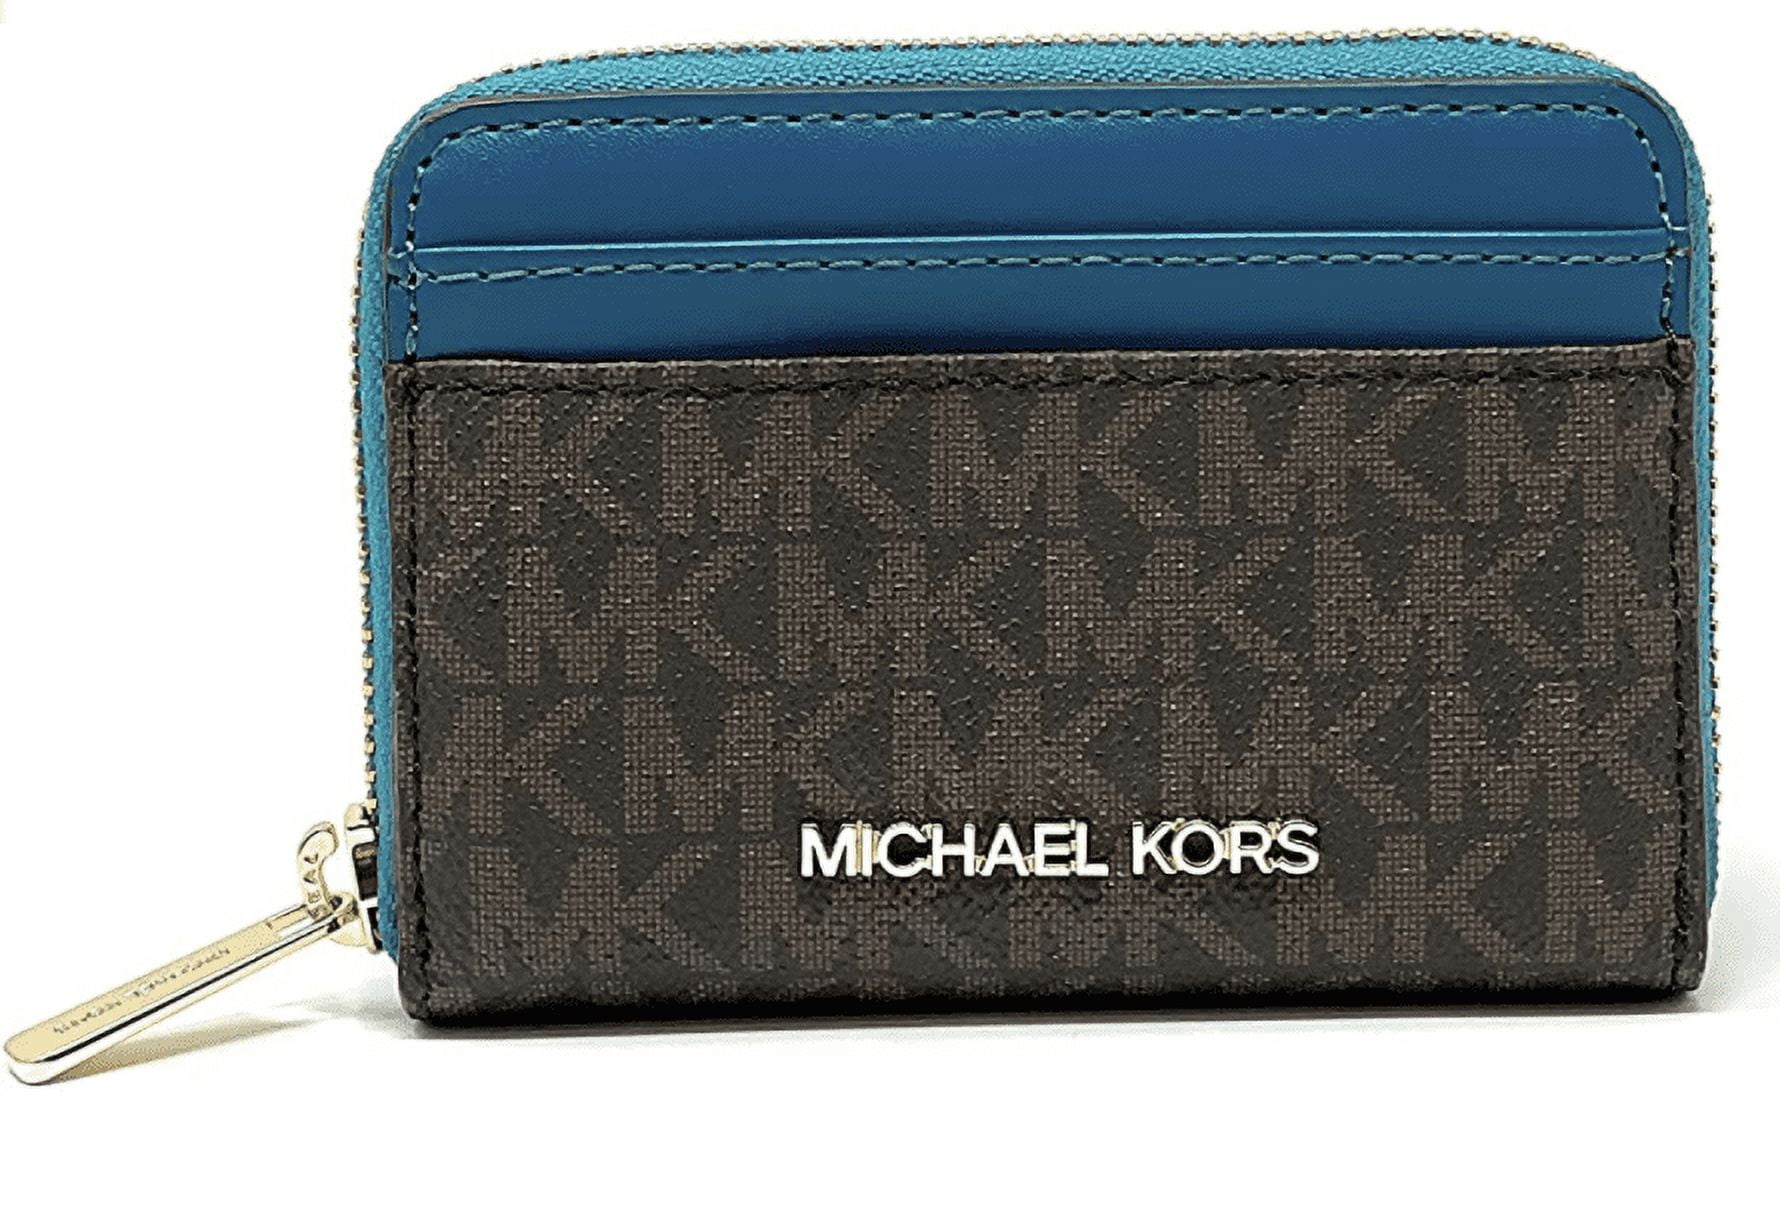 Wallets & purses Michael Kors - Jet Set medium blue snap wallet -  34F9GJ6Z8L406